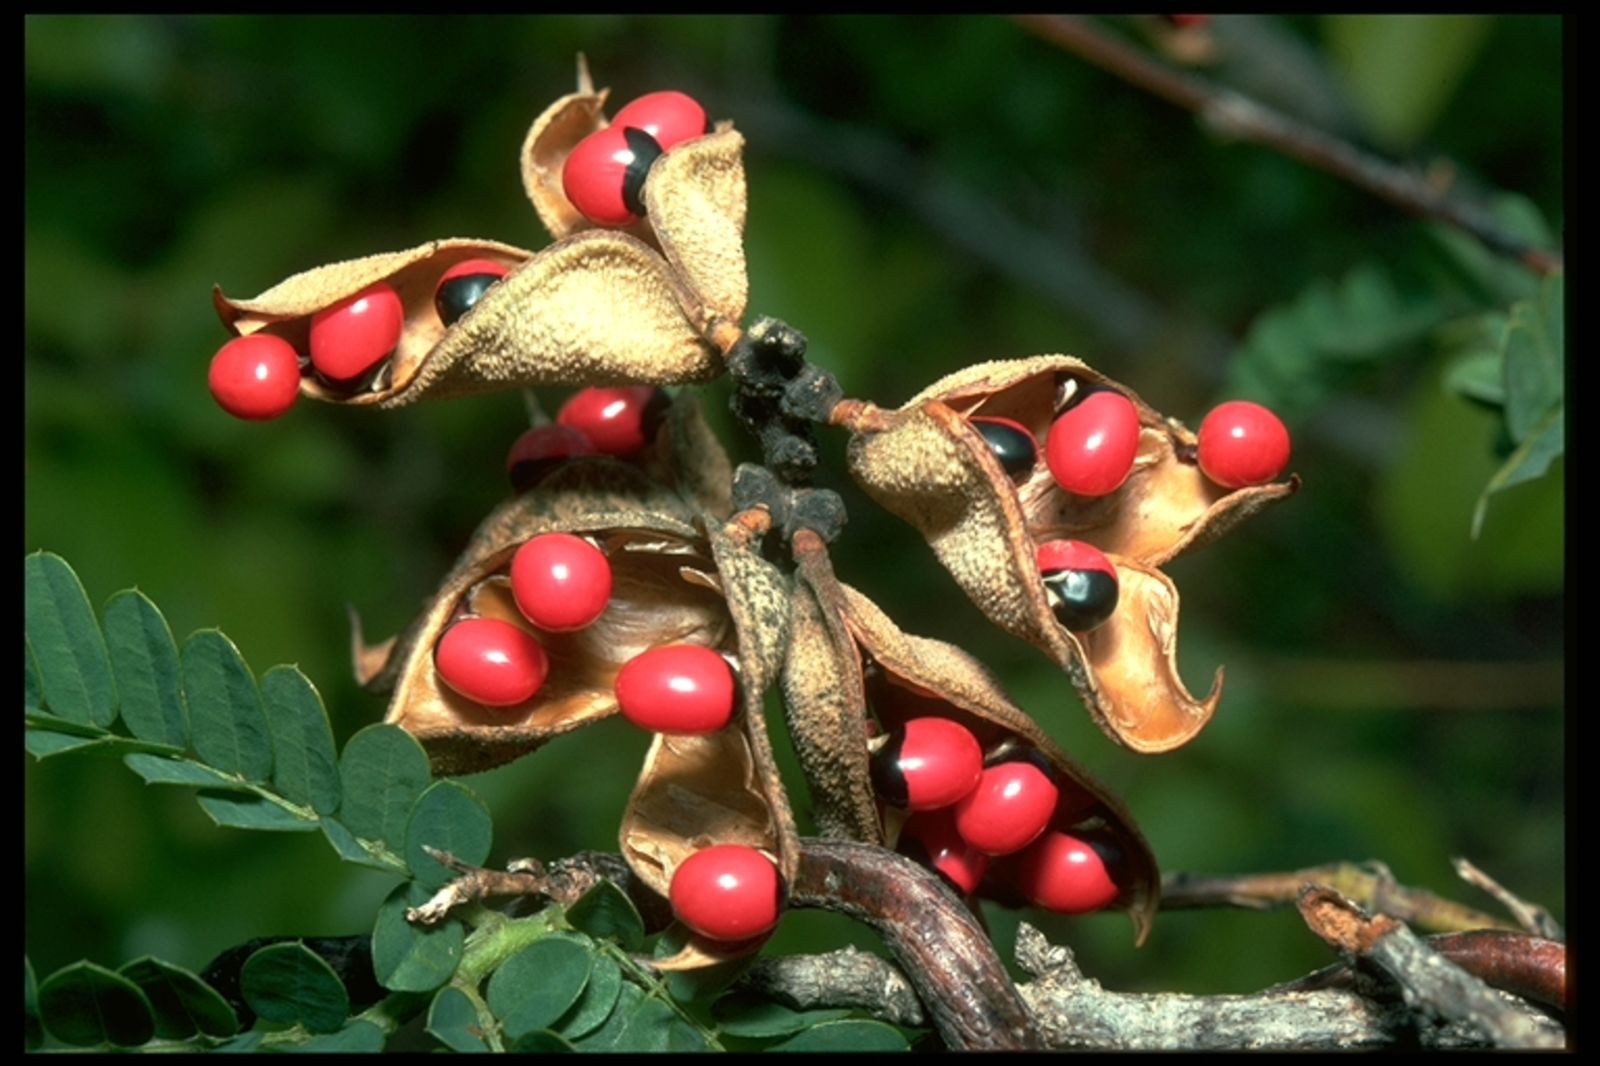 Abrus precatorius is most deadly plant in the world